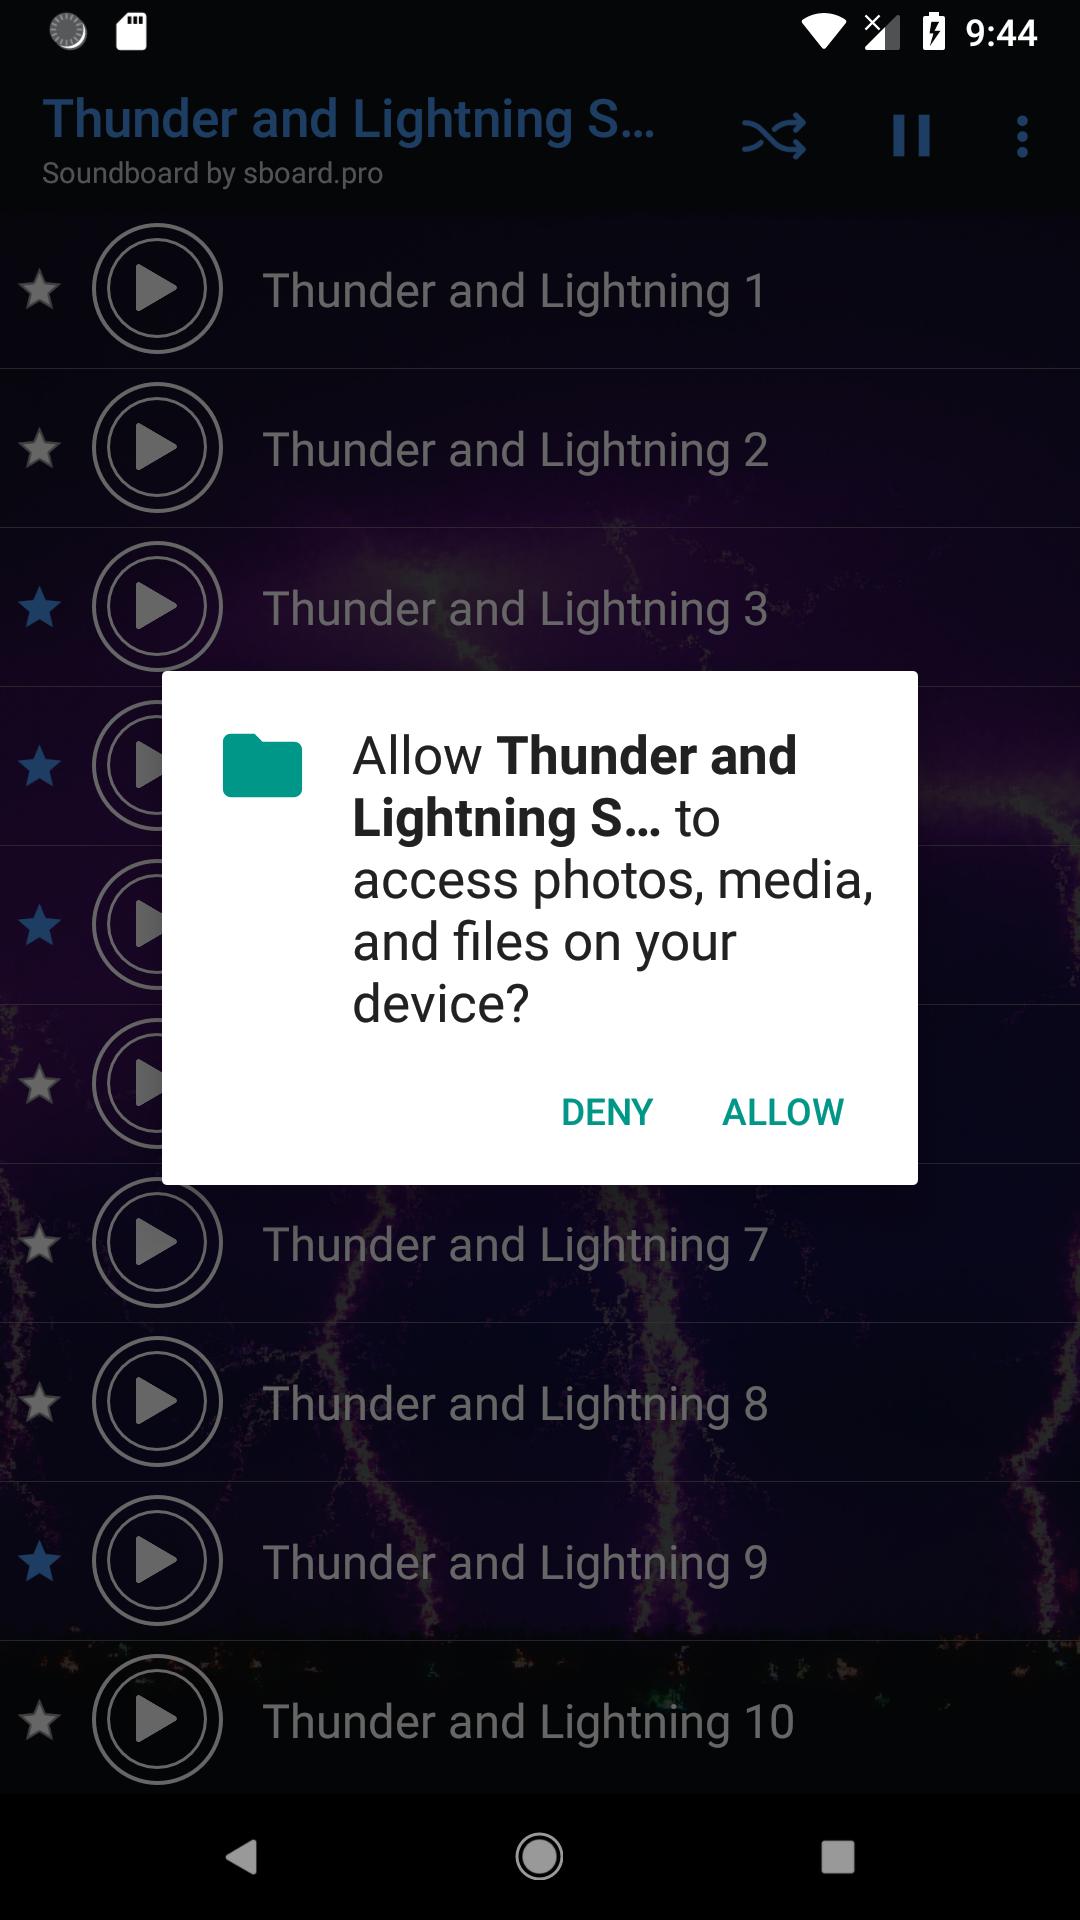 Thunder and Lightning Storm Sounds 1.1.3 Screenshot 2